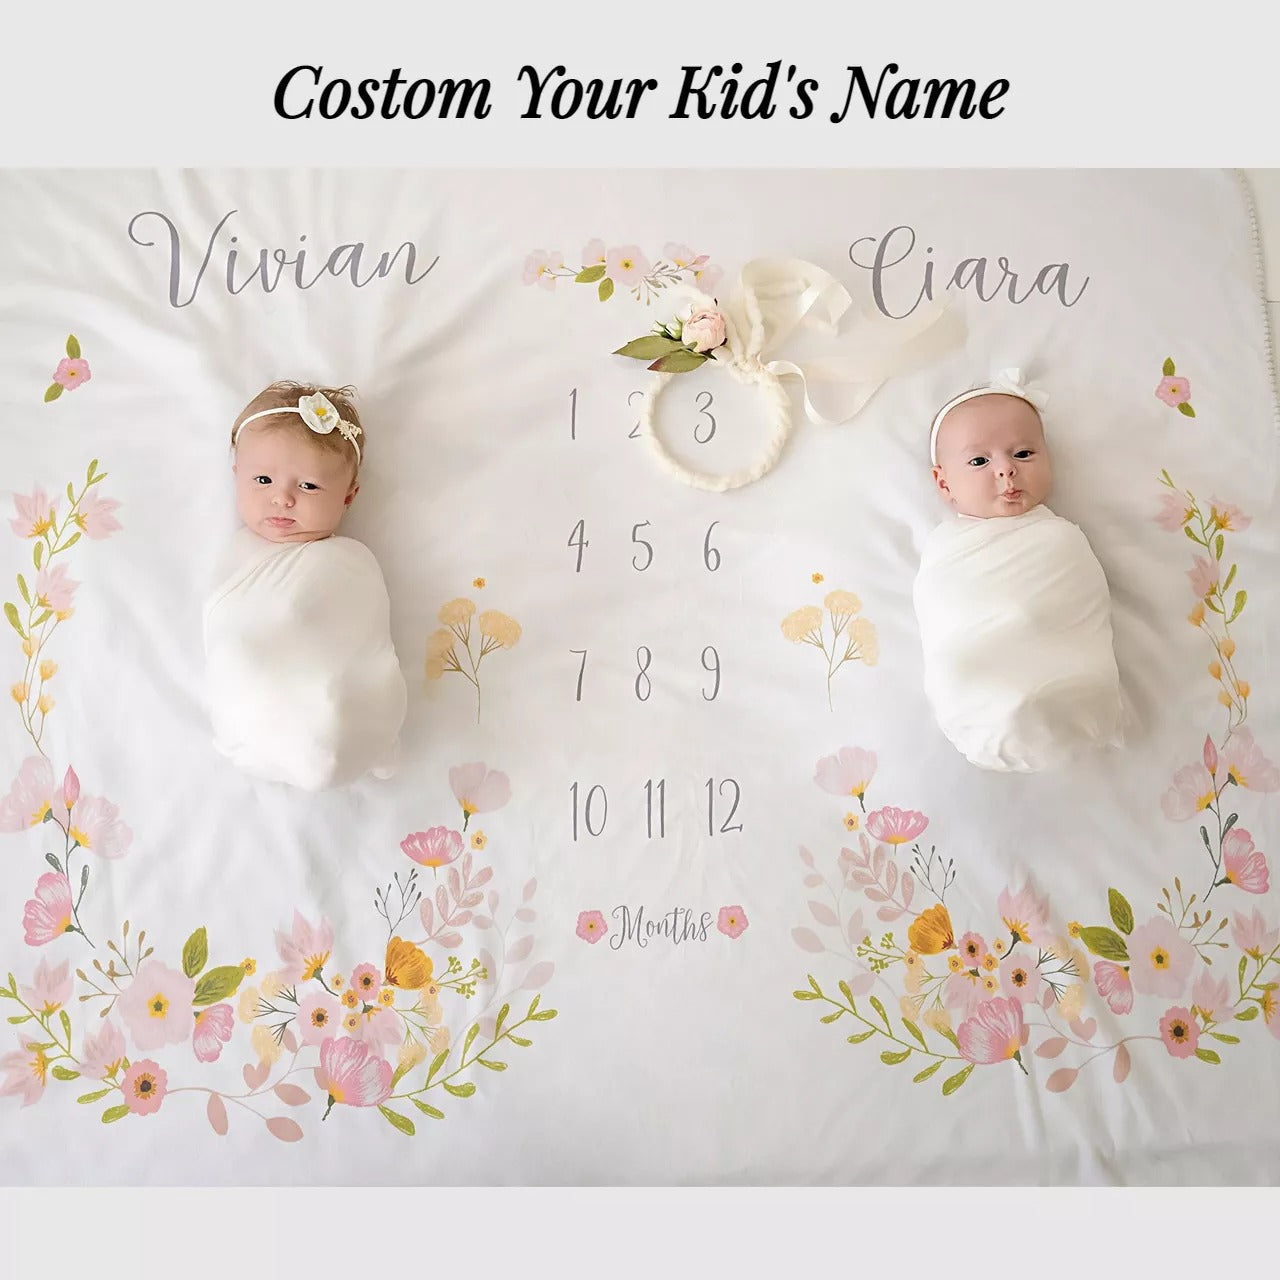 Customized Twins Baby Blanket Fullmonth Twins Boy Twins Girl Fleece Sherpa Soft Cozy Warm Blanket Gift For Twins Newborn